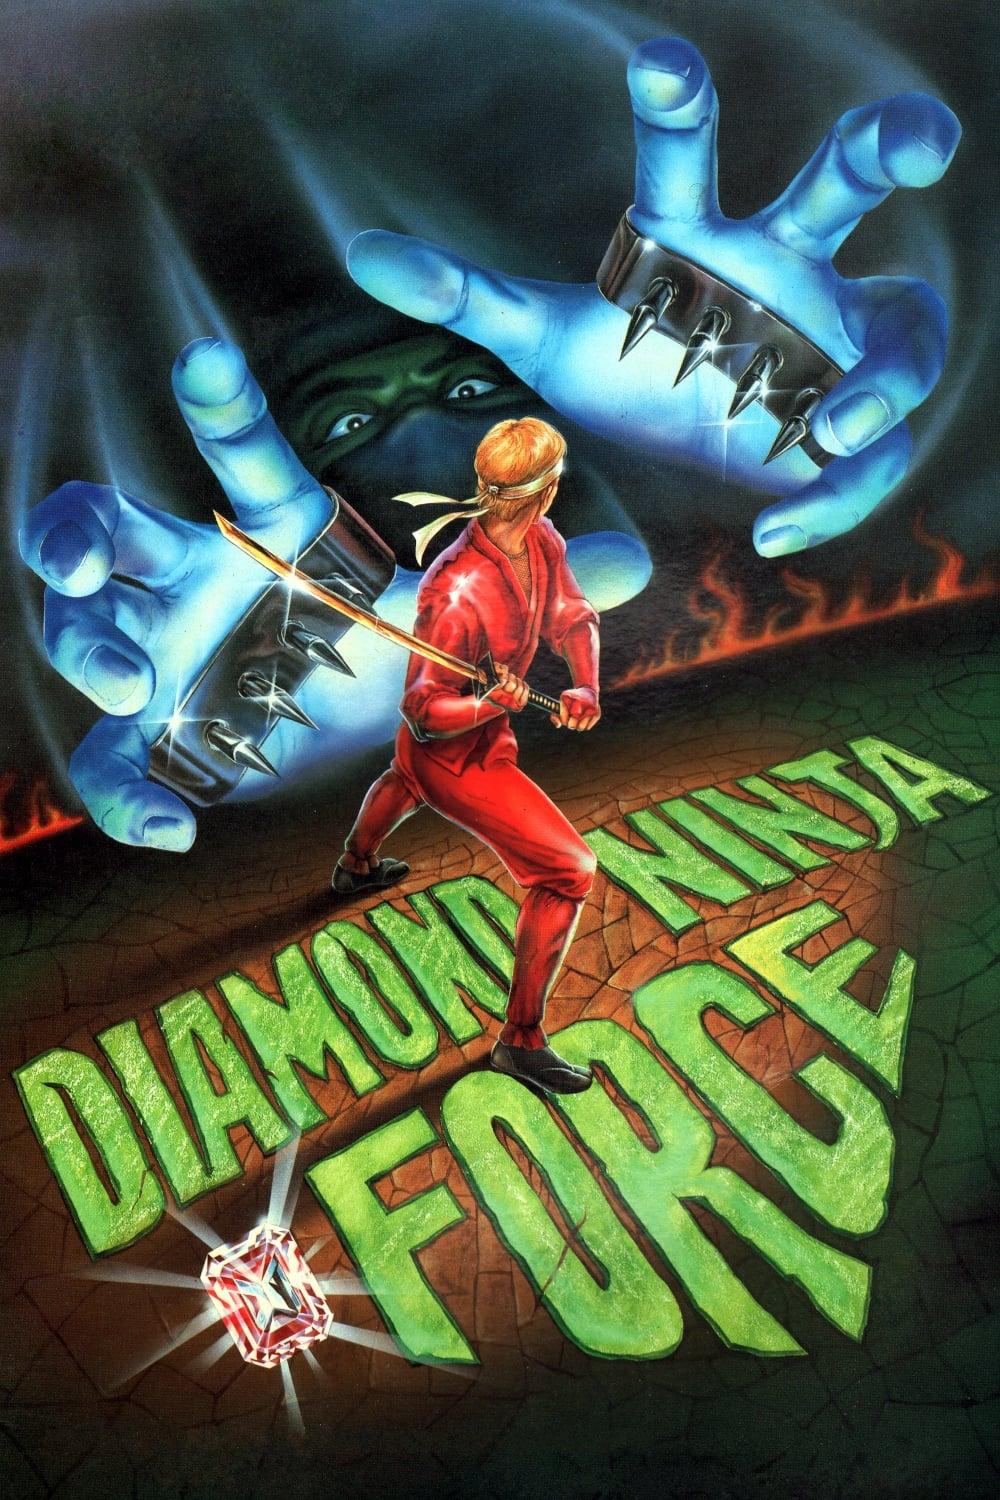 Diamond Ninja Force poster